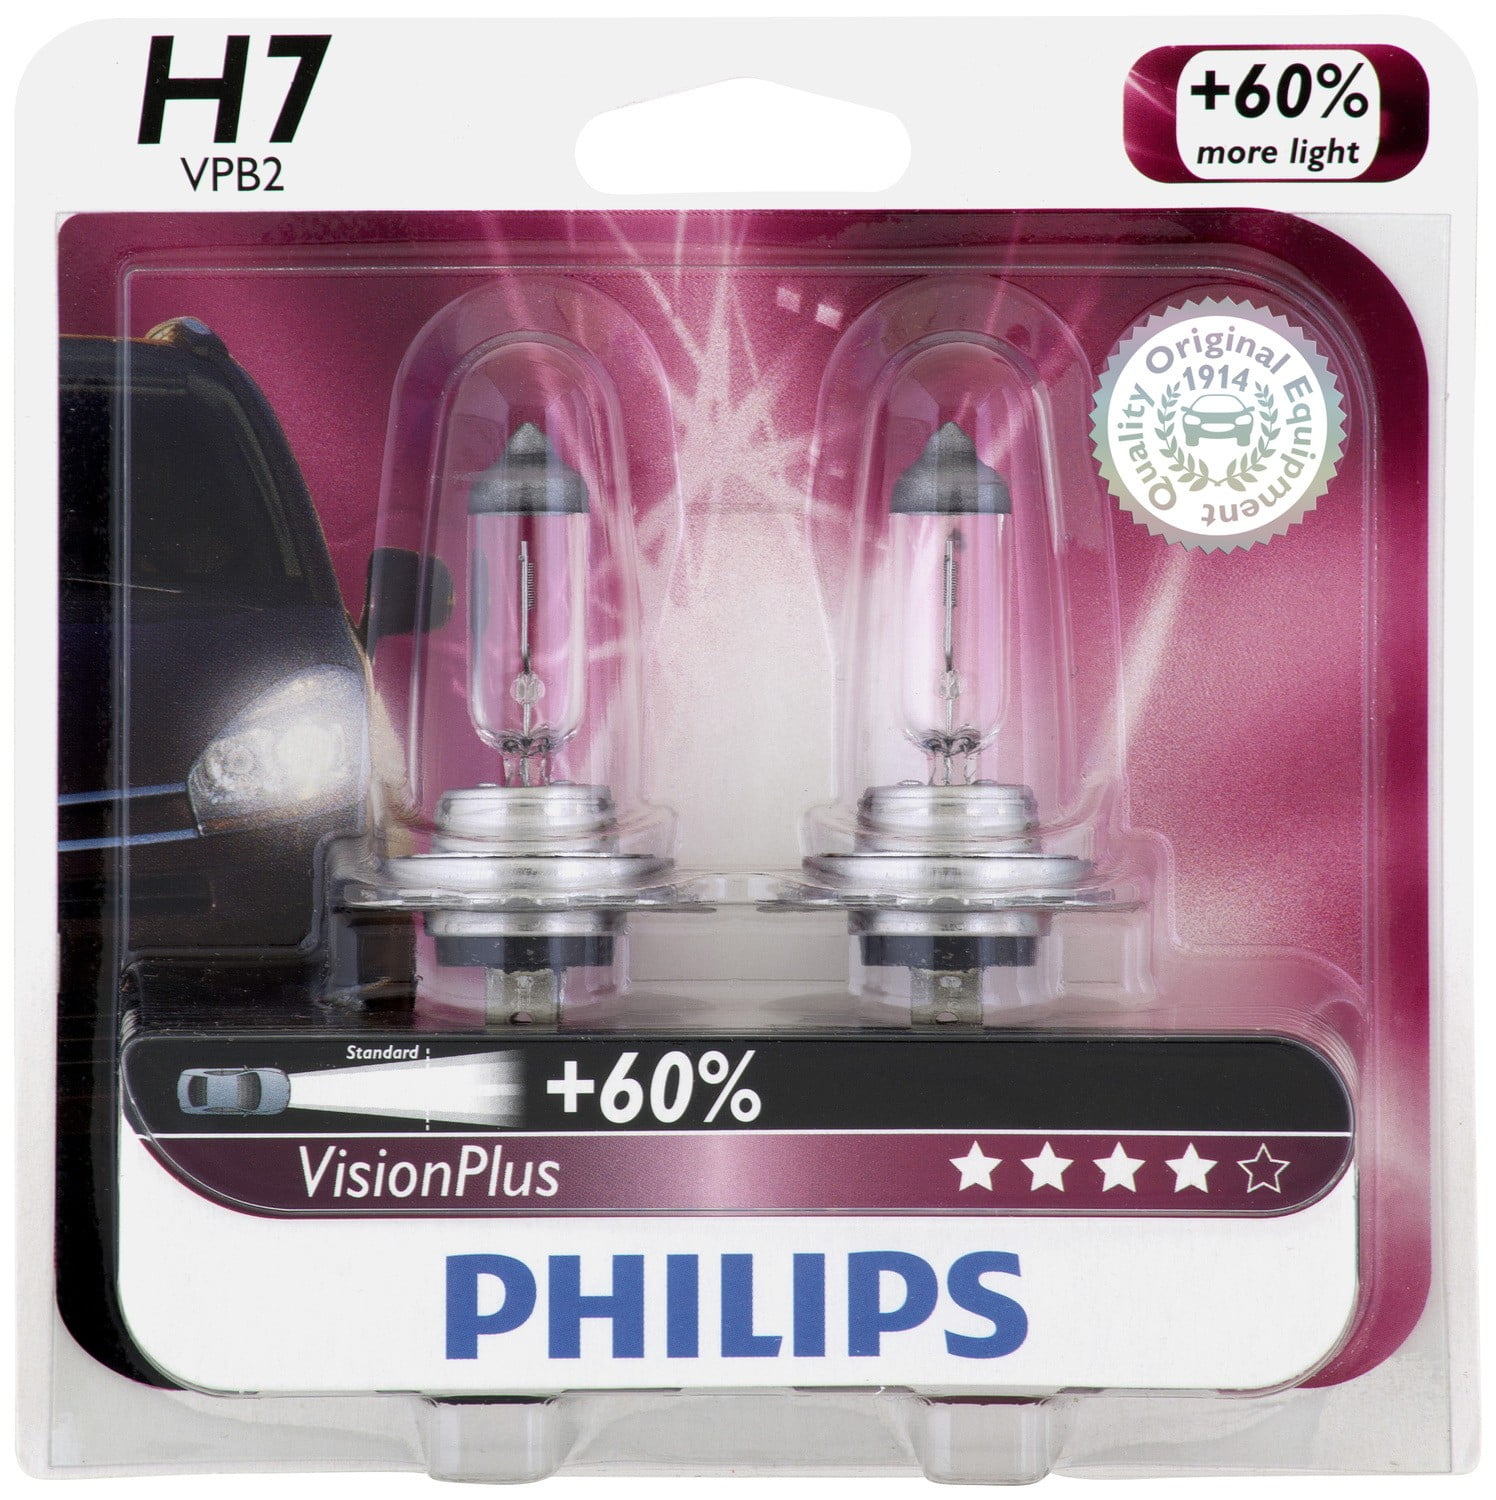 Philips VisionPlus H7VPB2 Headlight Bulb